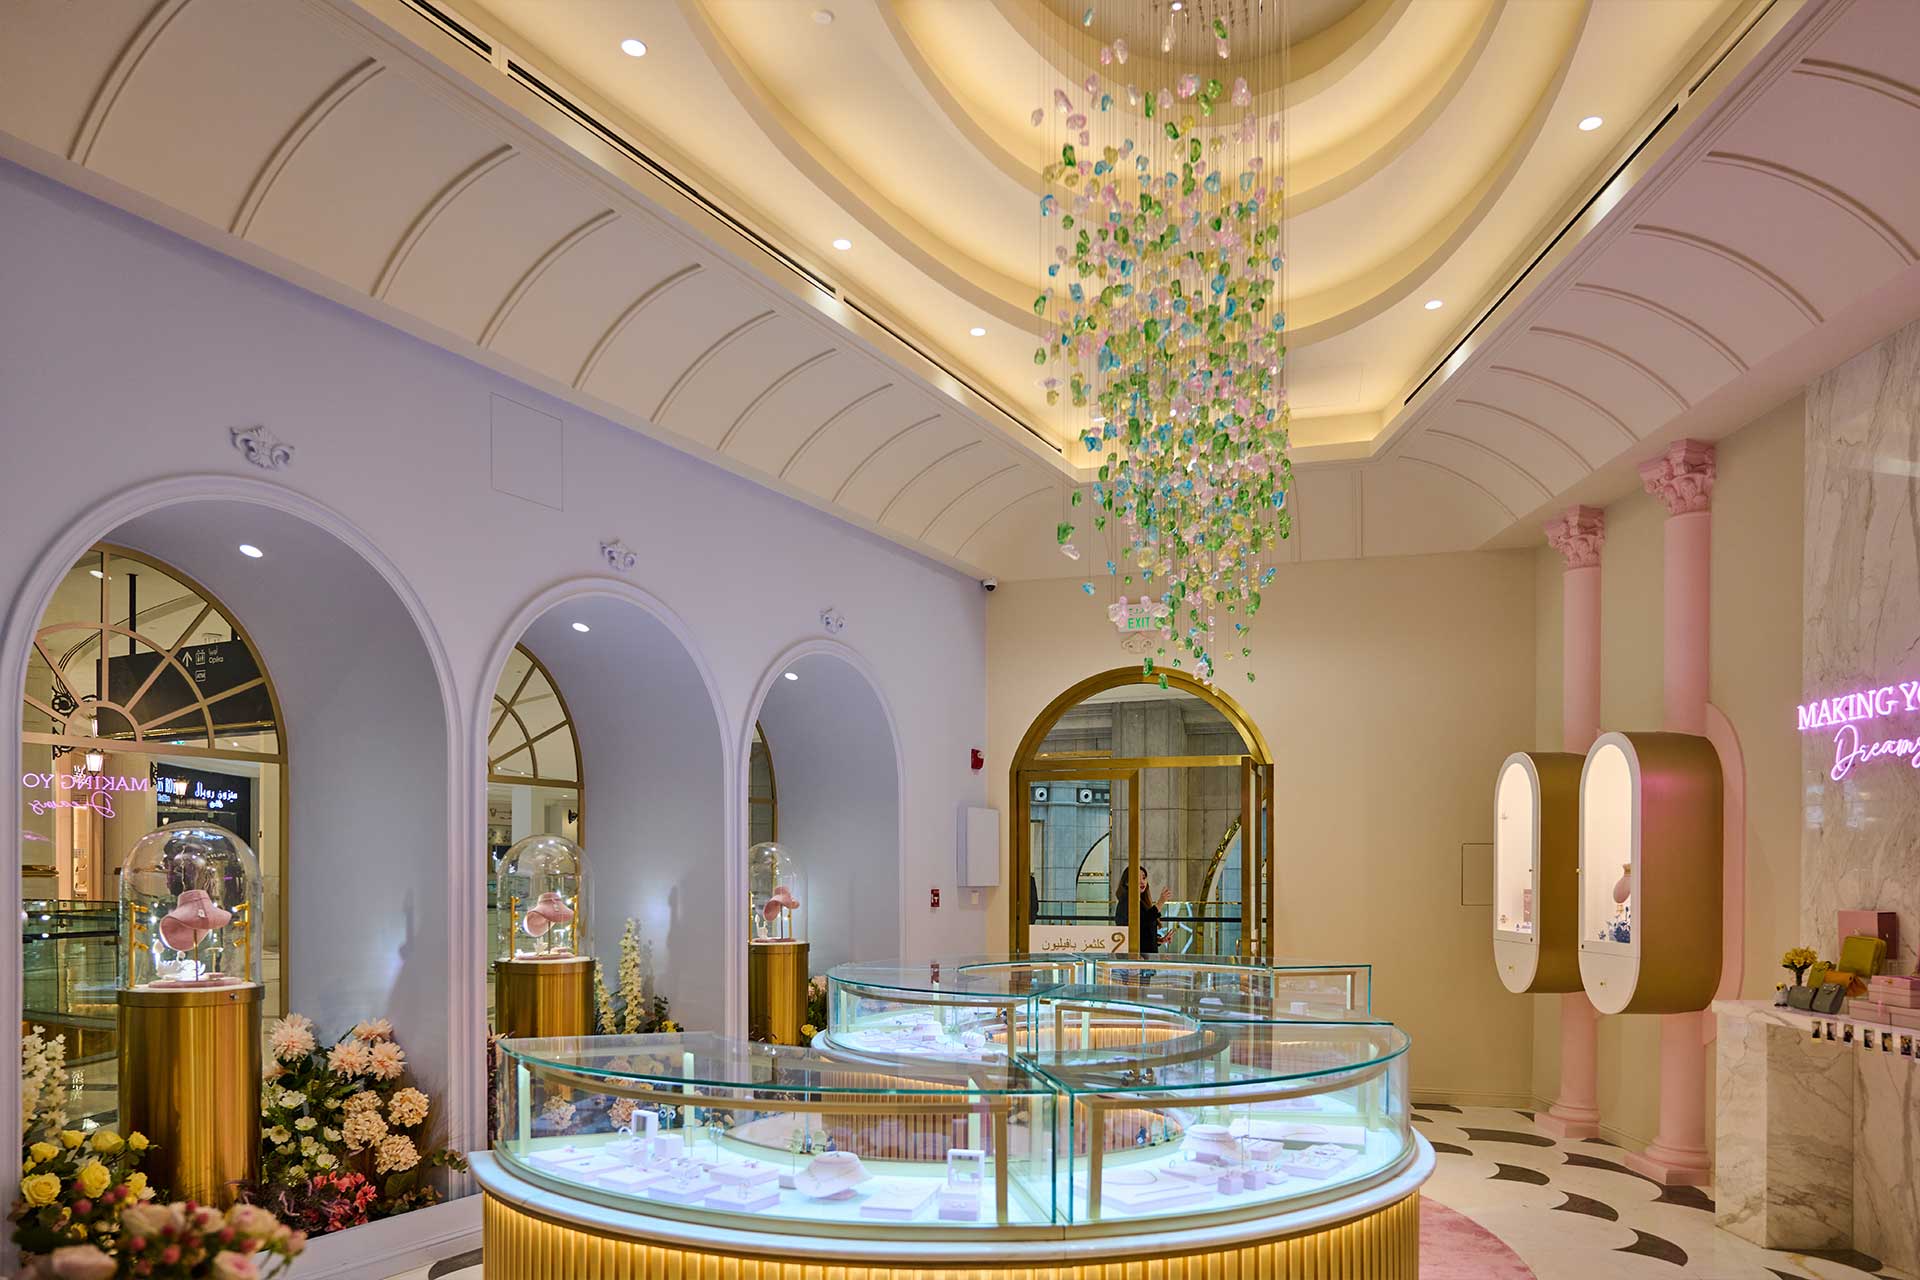 Luxurious ambiance of Klatham's Pavilion, Vendome Mall, Qatar - Image 4